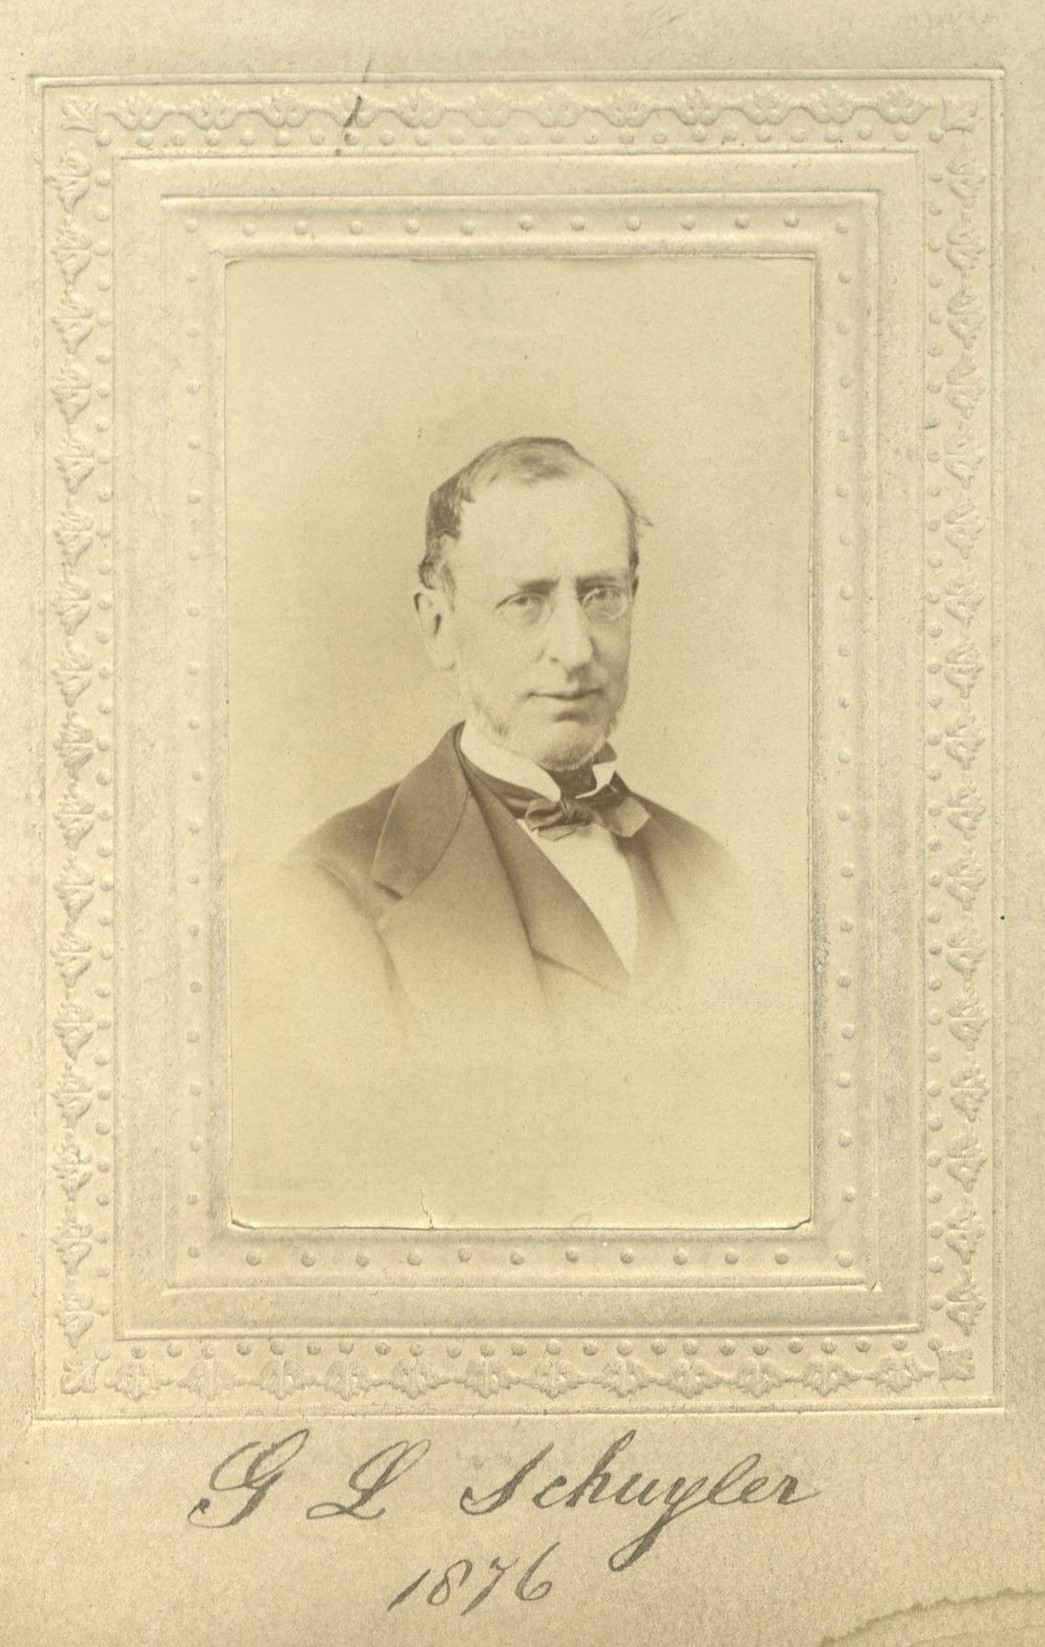 Member portrait of George L. Schuyler